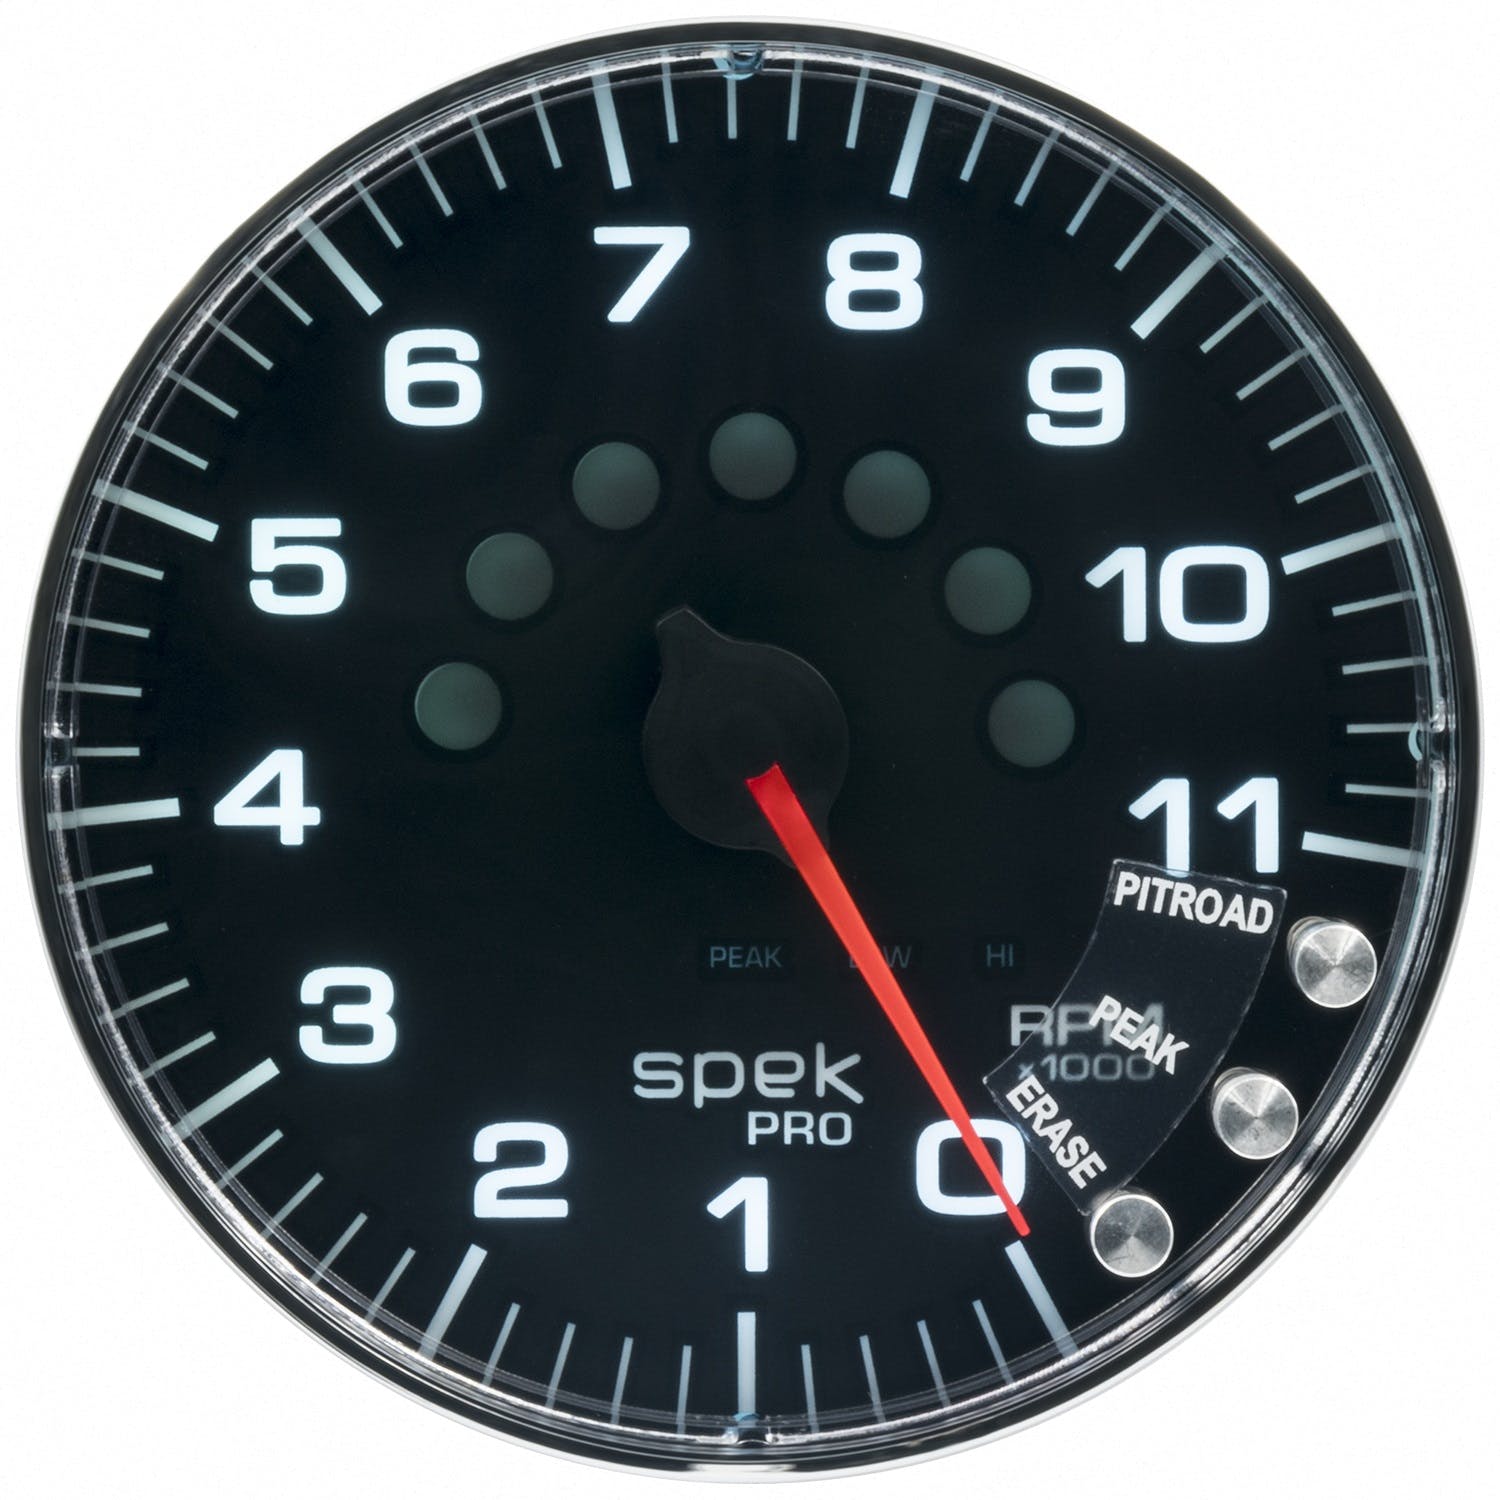 AutoMeter Products P239318 Spek Pro Tachometer Gauge, 5, 11K RPM, with Shift Light Black/Chrome